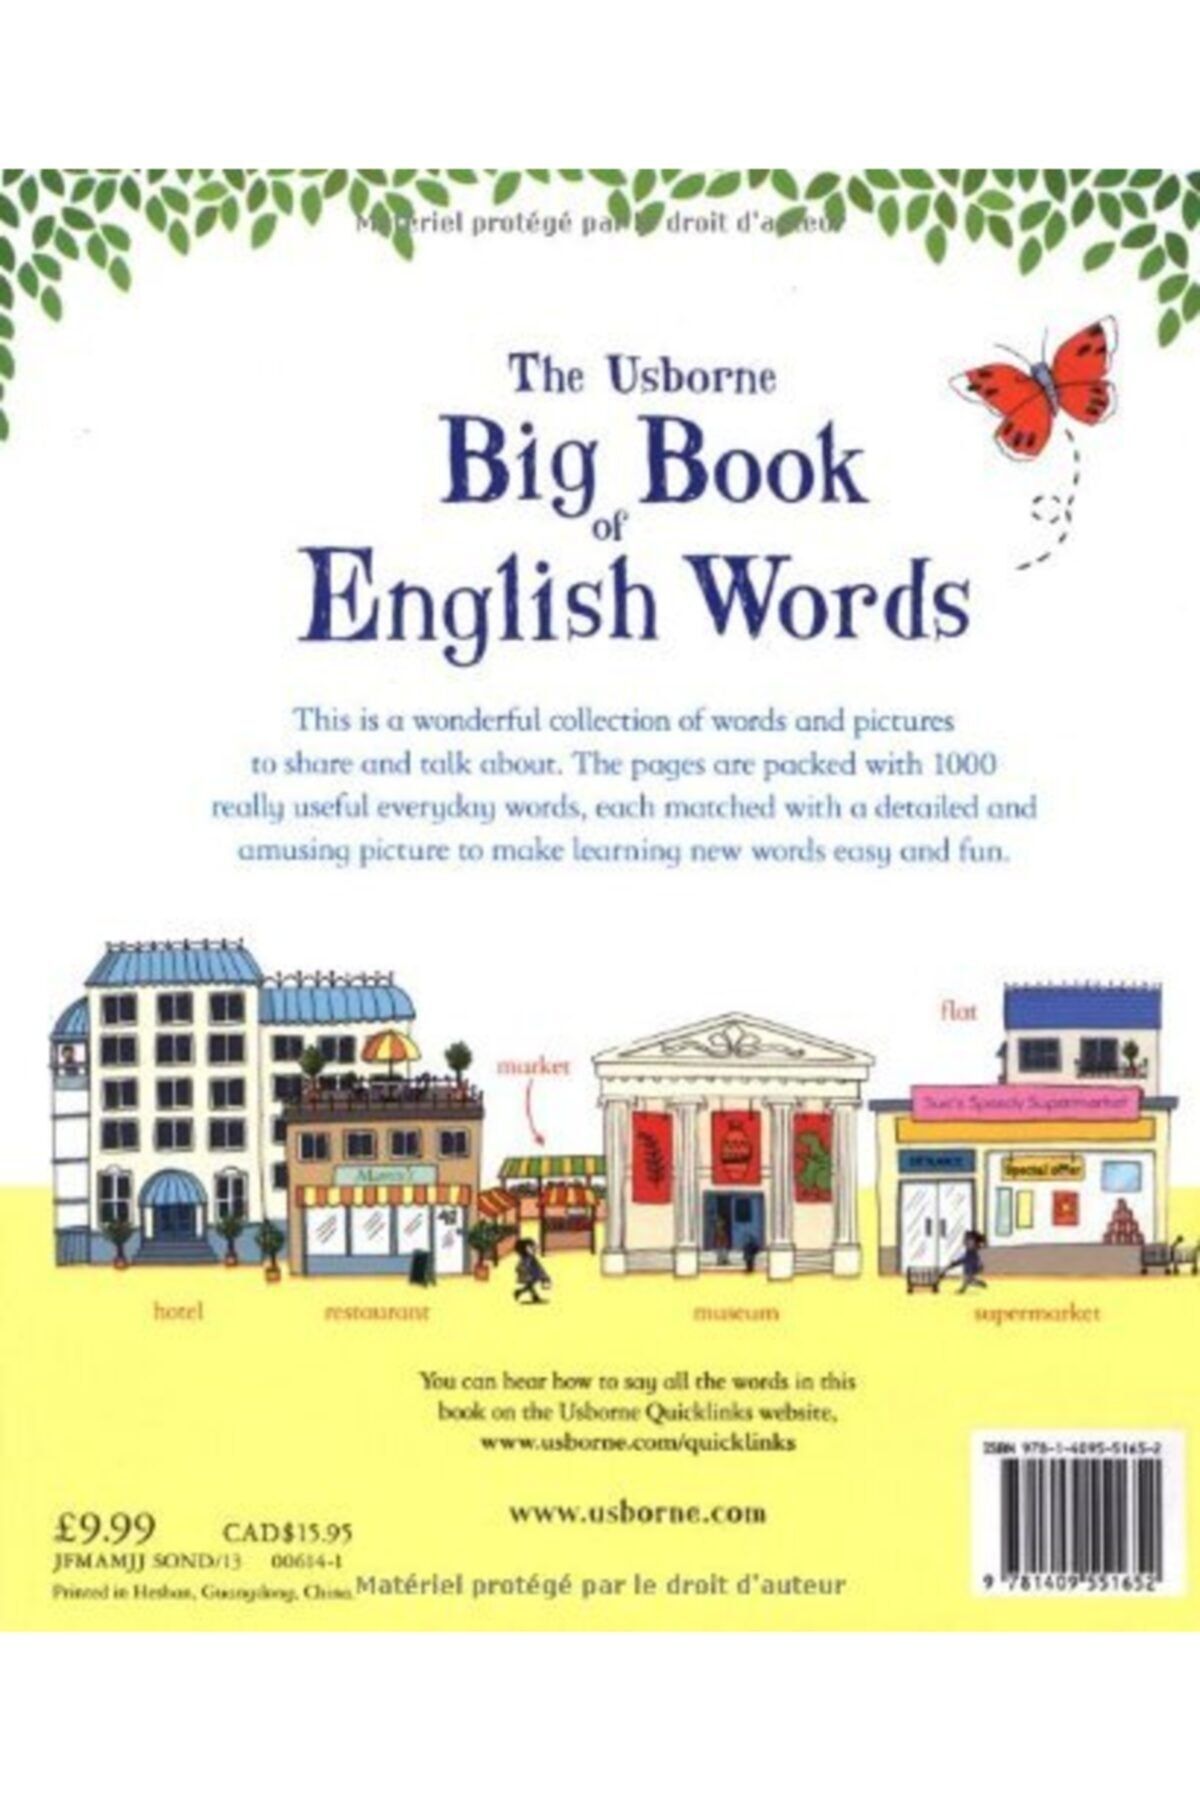 Usborne Big Book Of English Words Fiyatı, Yorumları - Trendyol